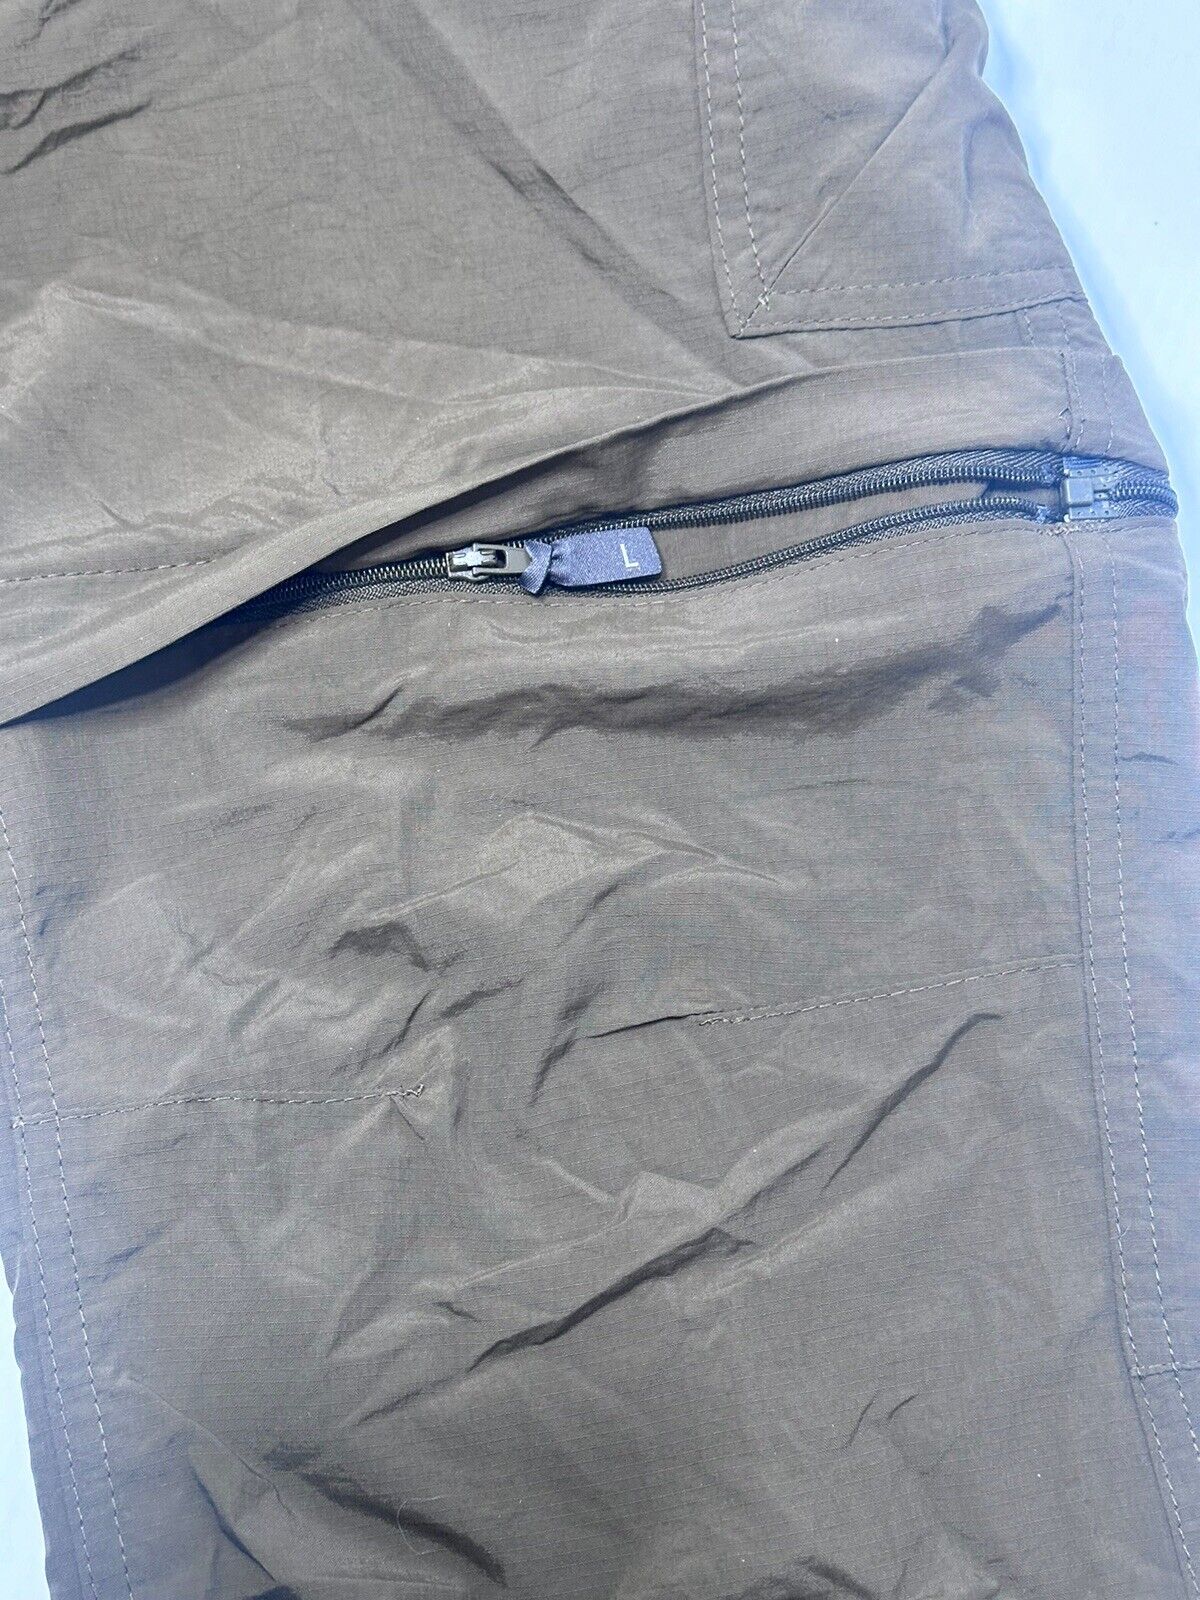 Columbia Convertible Nylon Pants Men’s Cargo Size 36x32 Khaki Green | eBay